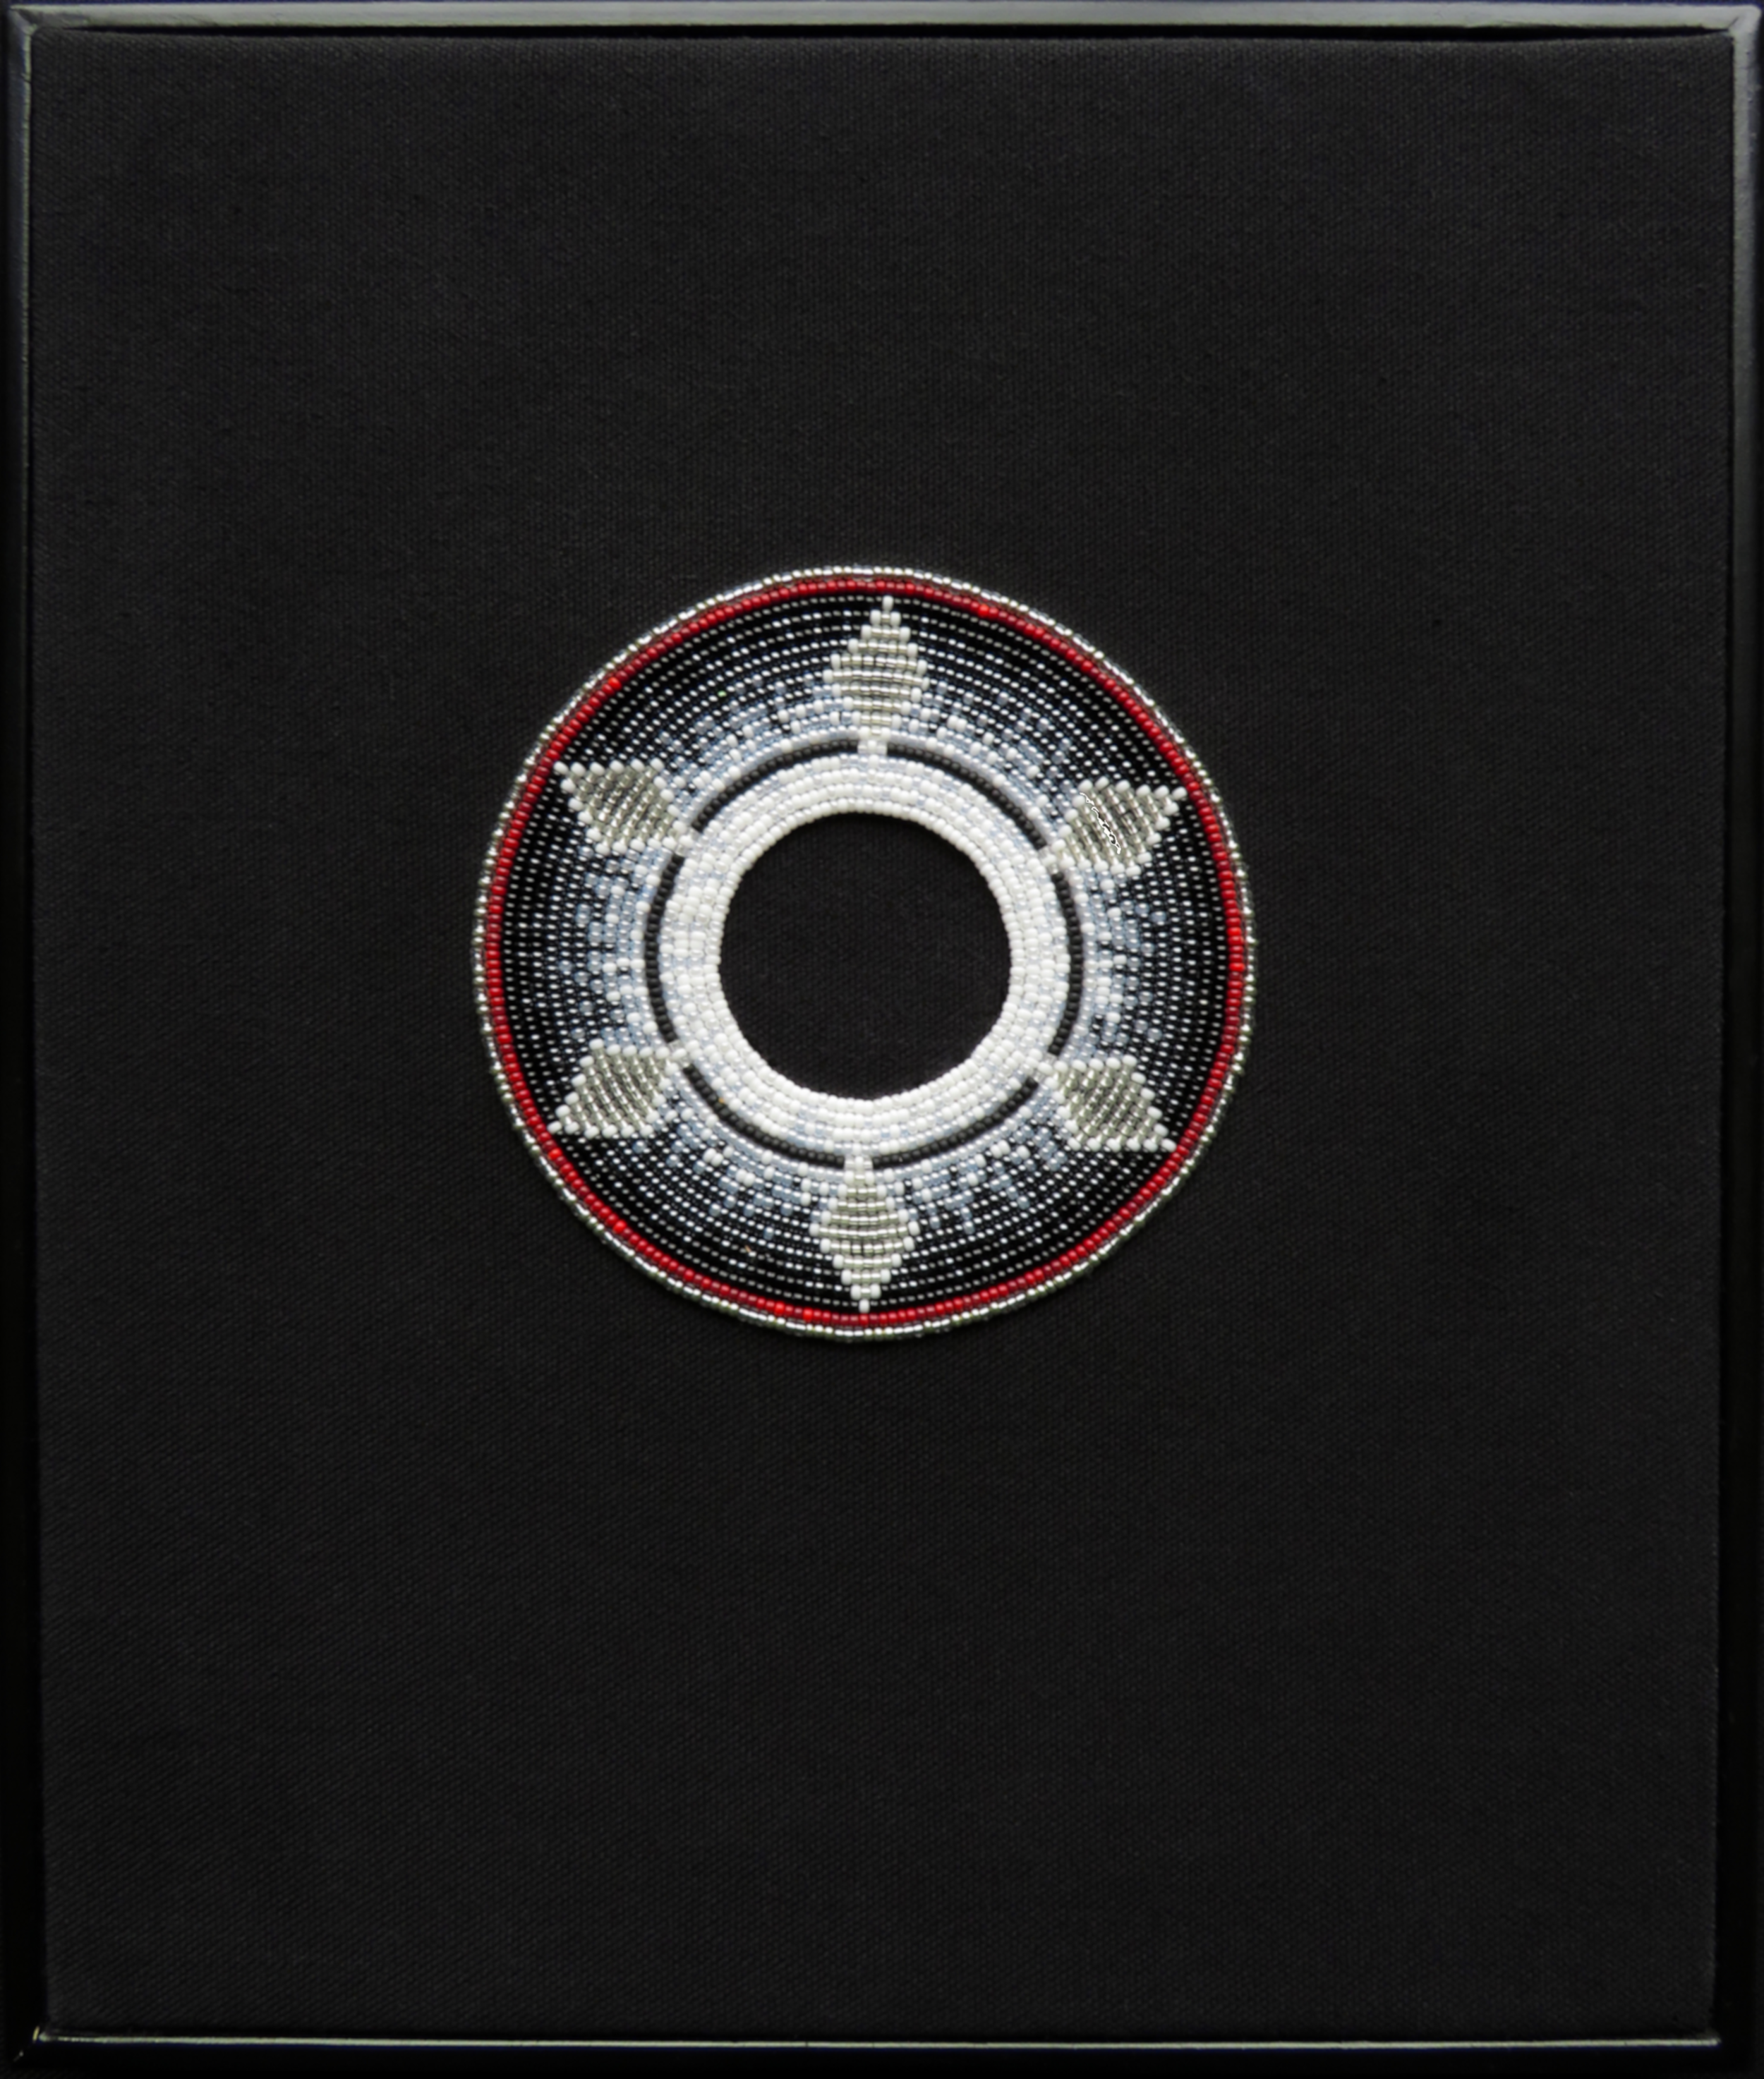 SN*WFLAKE AT THE RUBIC*N  
Miyuki 11/0 seed beads · appliqué on canvas 
masonite panel mount · 9 3/4” x 11 3/4”  
2022 · artist's collection 